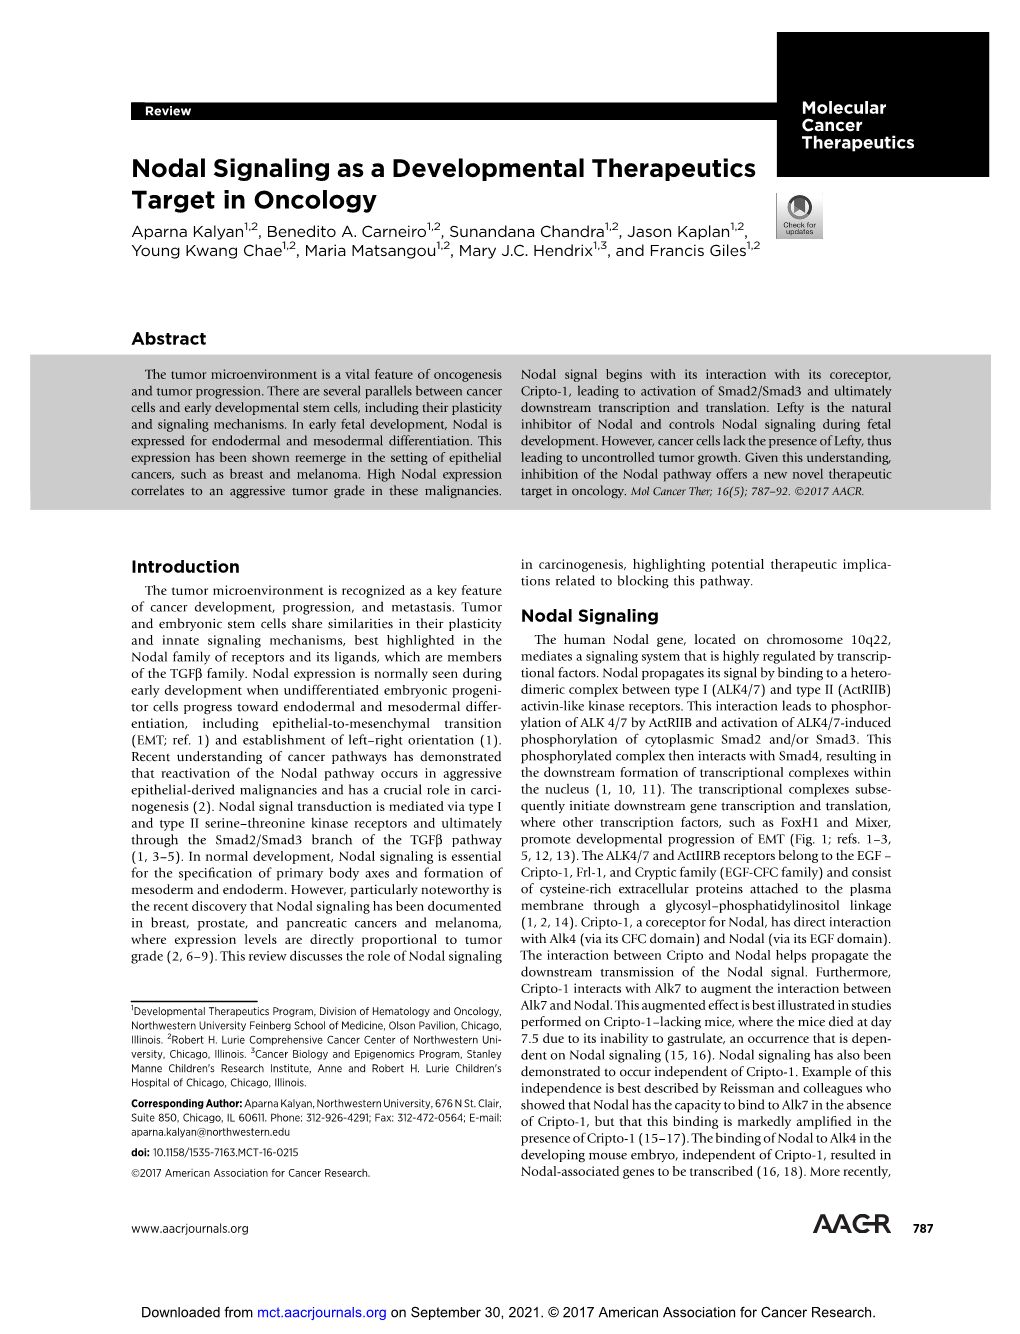 Nodal Signaling As a Developmental Therapeutics Target in Oncology Aparna Kalyan1,2, Benedito A